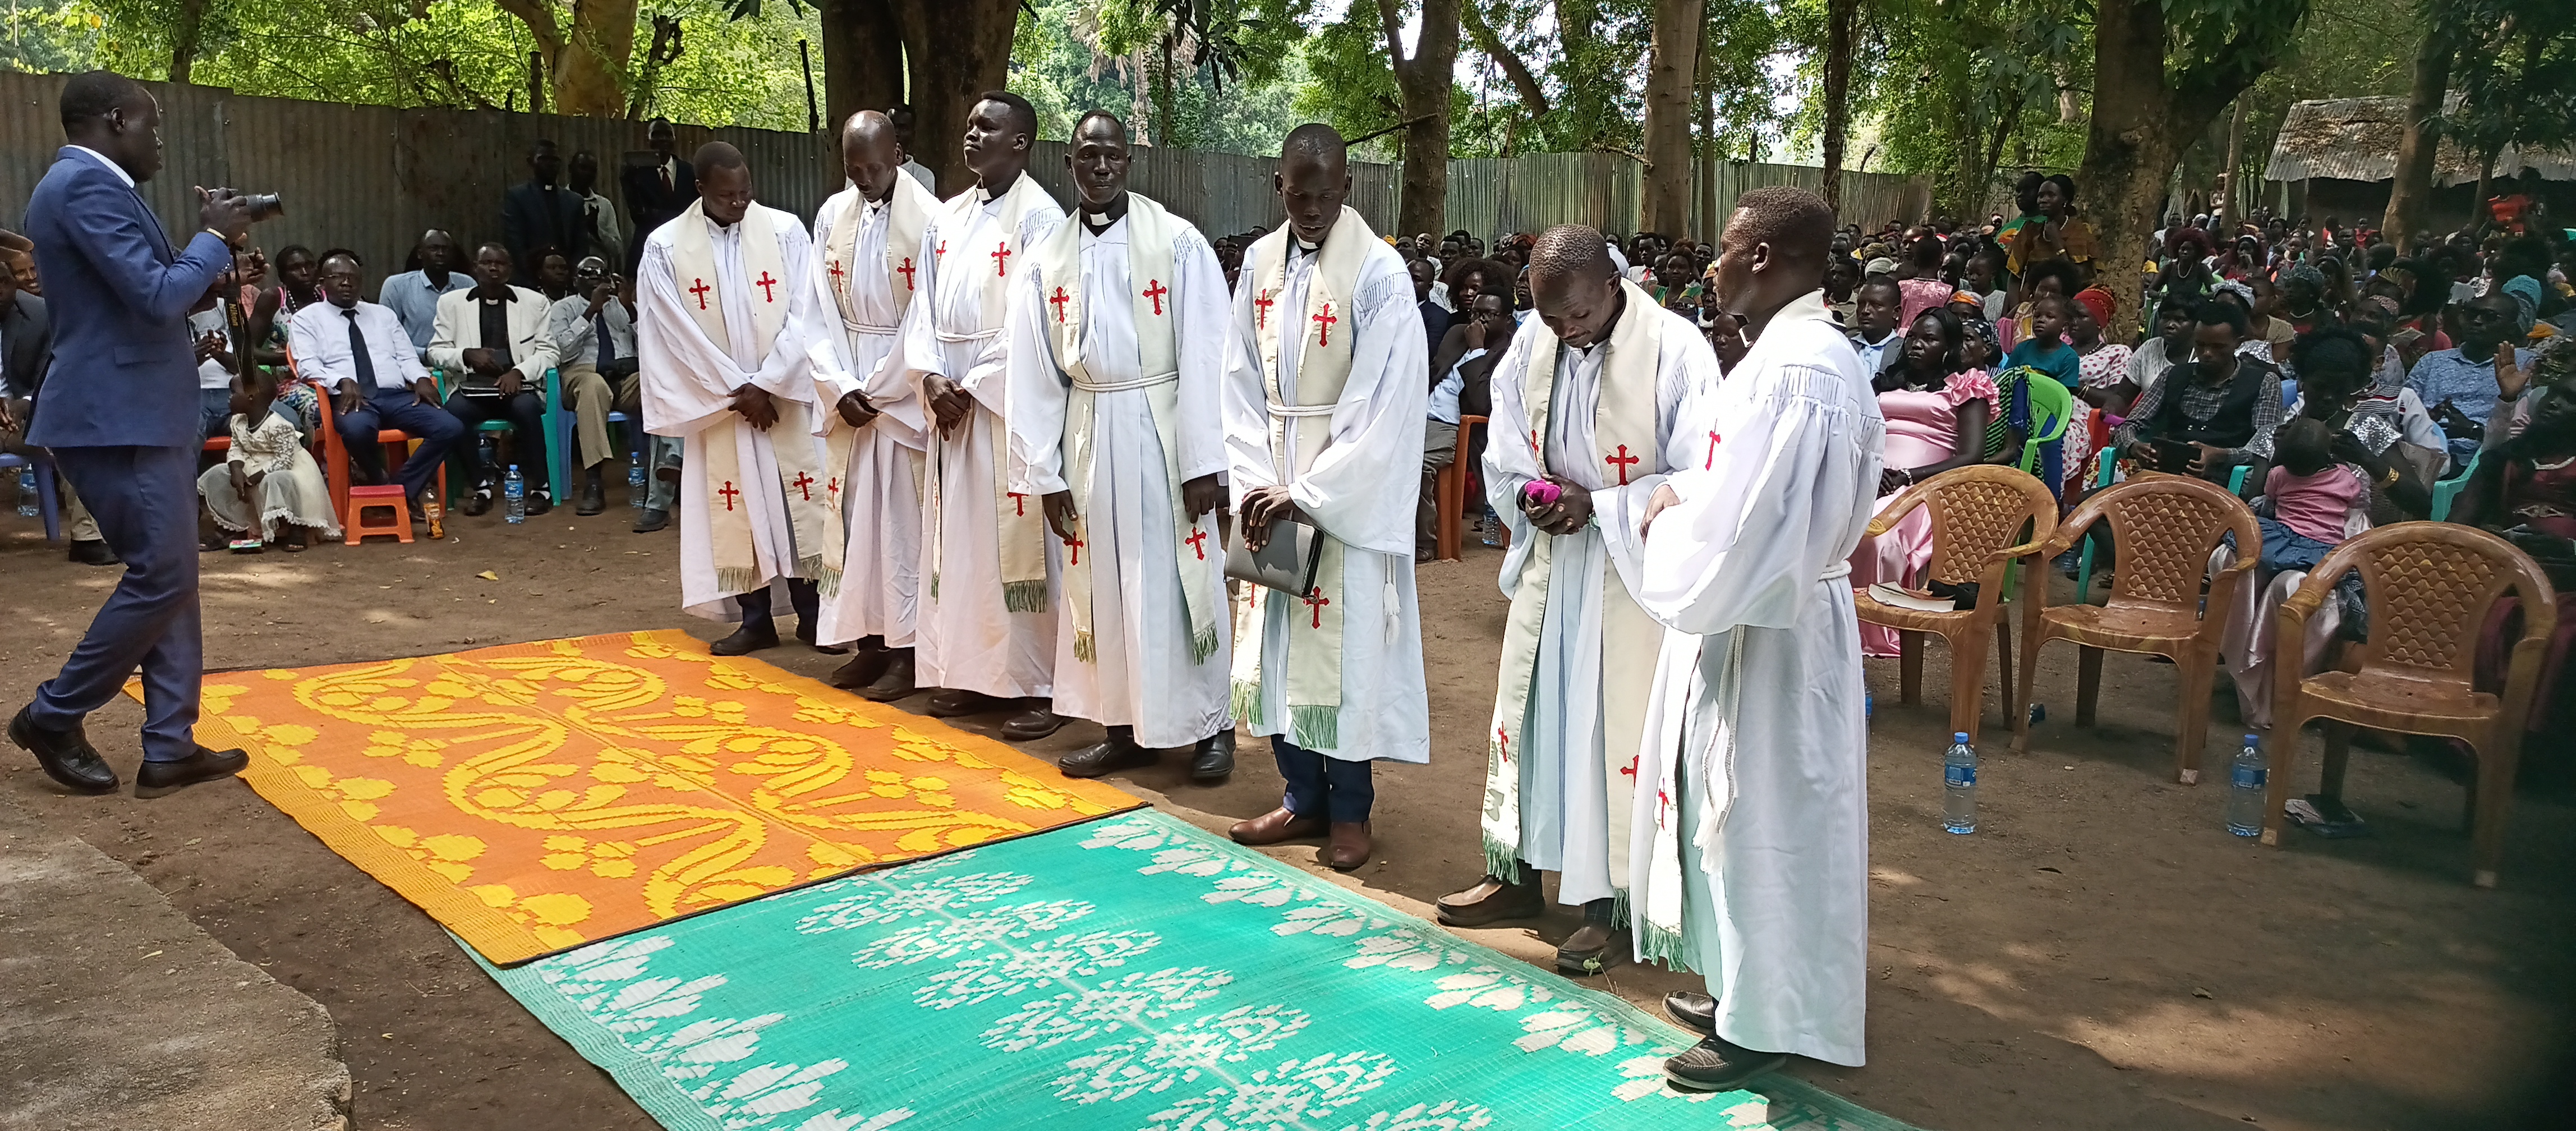 The ordination of (from left to right) Rev. William Cham, Rev. Opiew Ojulu, Rev. Gnigwo Omod, Rev. Mitiku Agwa, Rev. Olora Okweri, Rev. Aserat Gebreyesus,  and Rev. Apay Ojulu. Courtesy of Rev Gnigwo Omod.